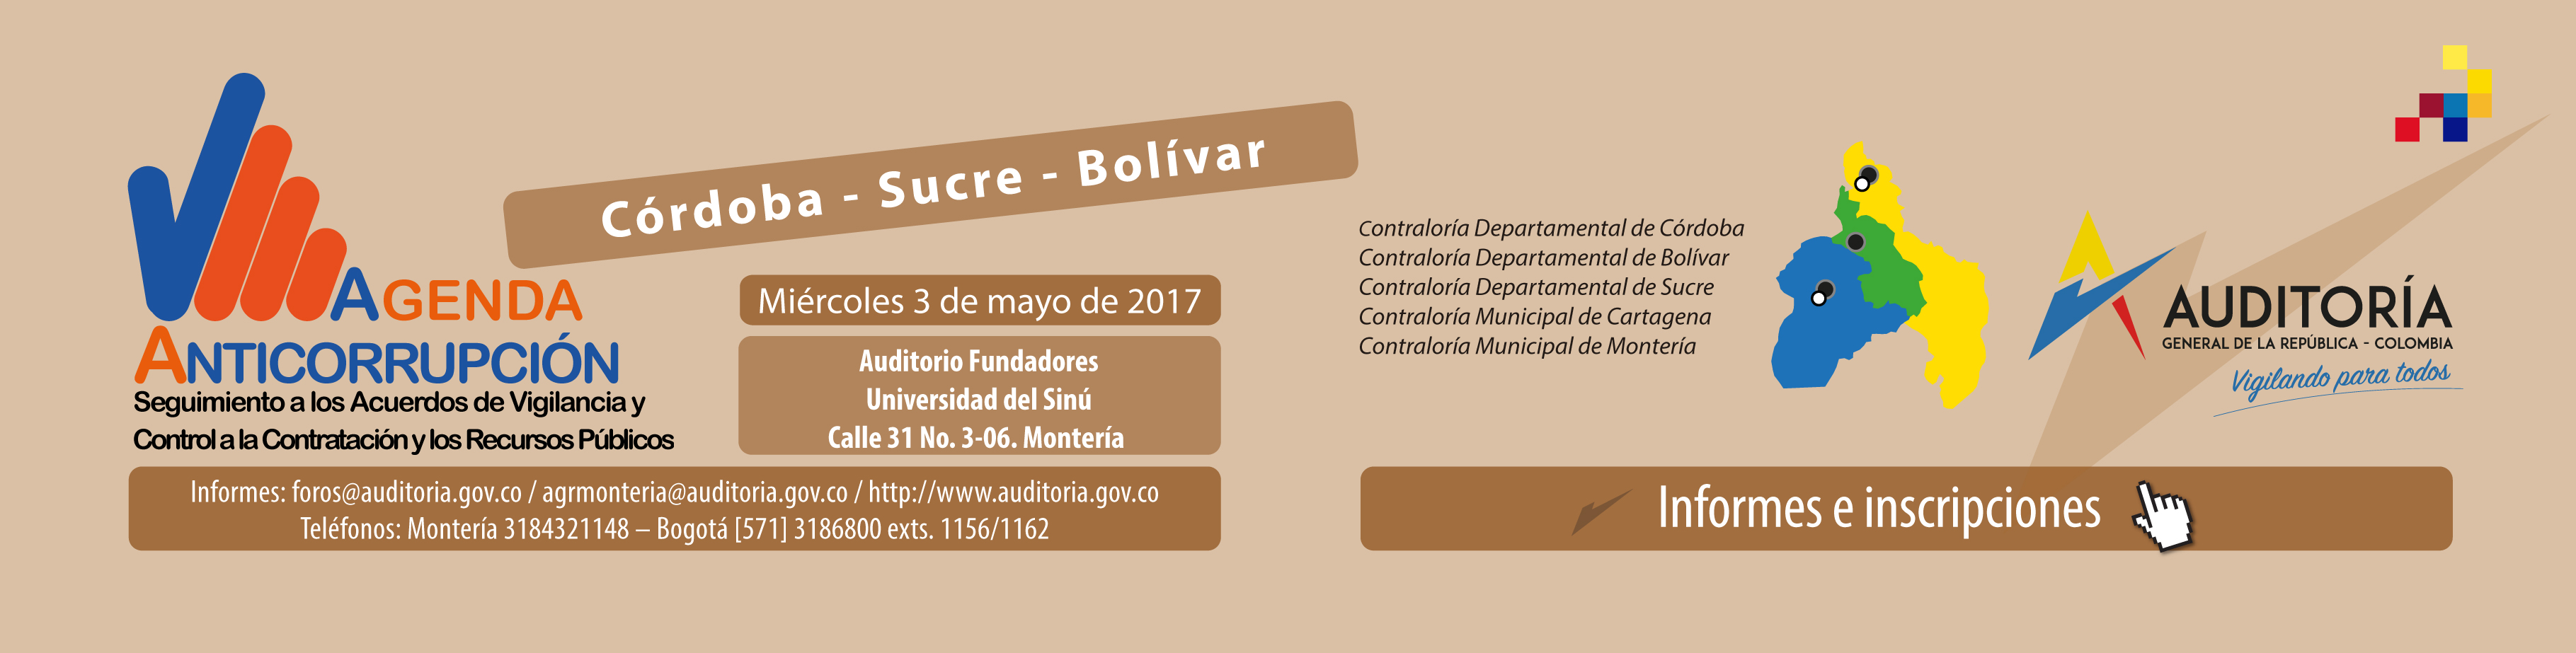 Agenda Anticorrupción con organismos de control fiscal de Córdoba, Bolívar y Sucre